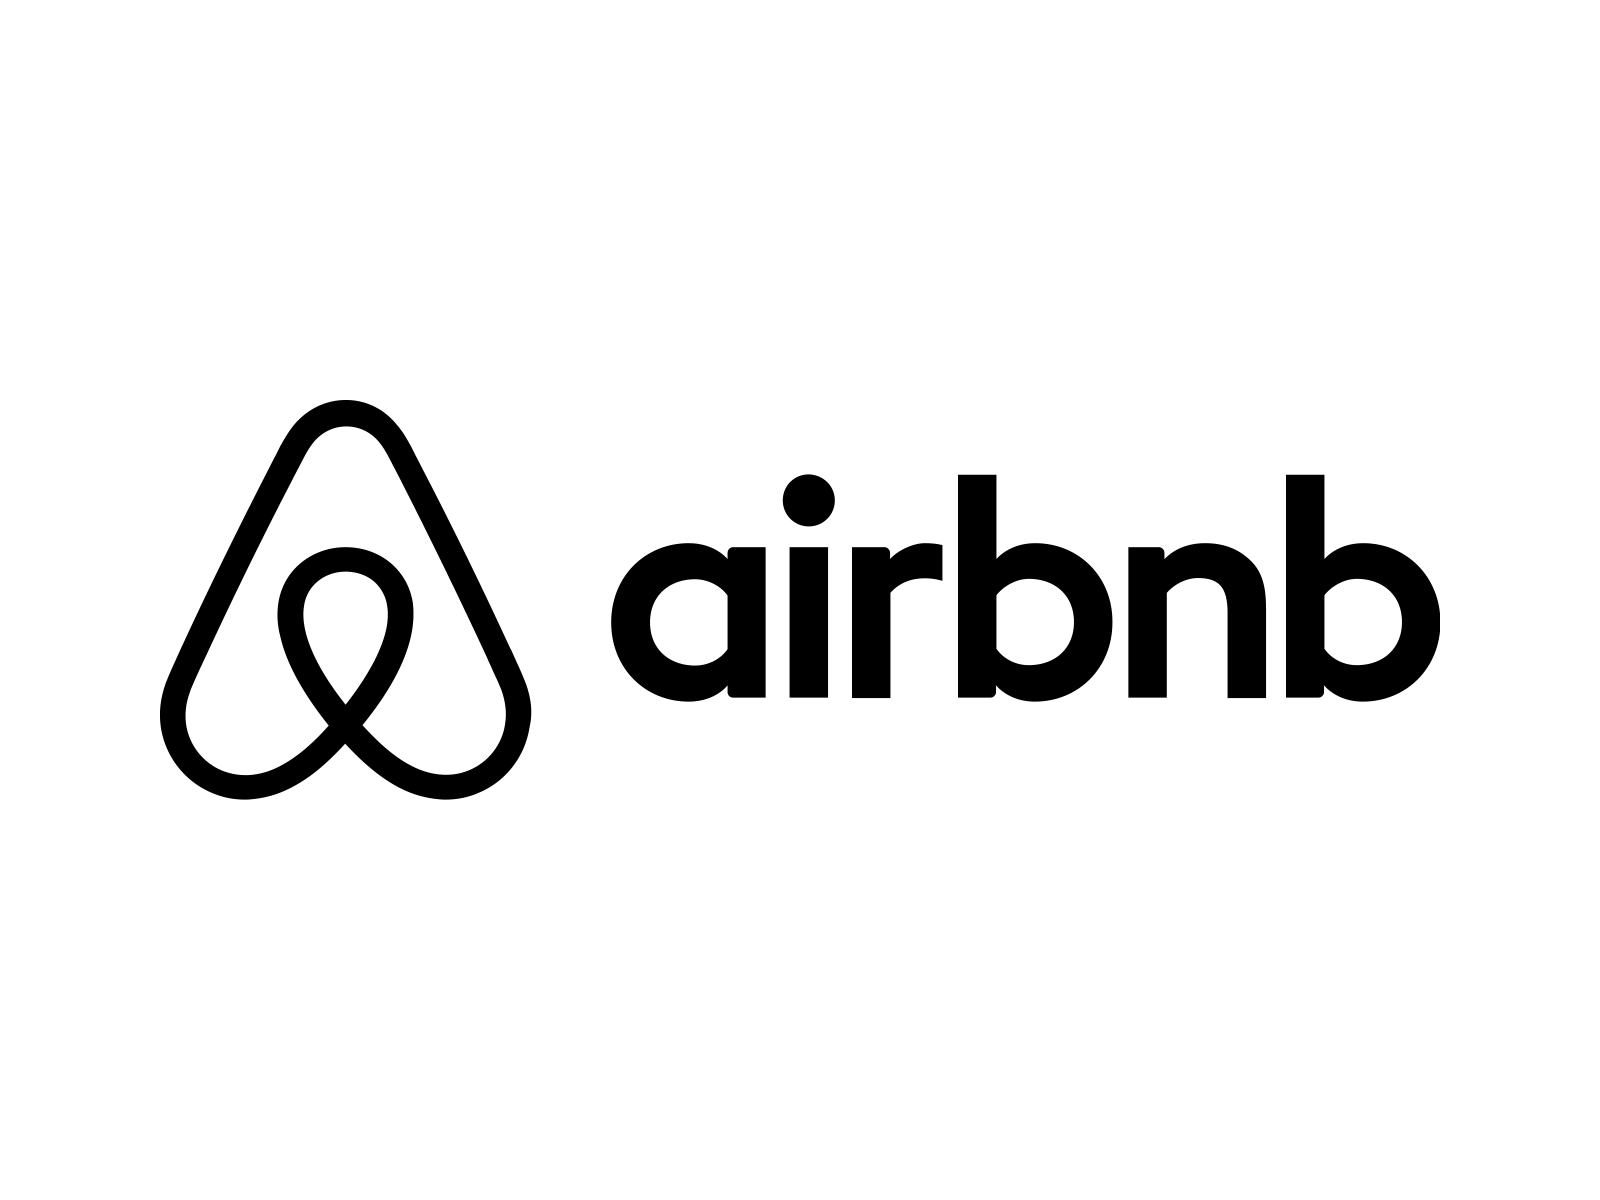 AIRBNB Logo Vector